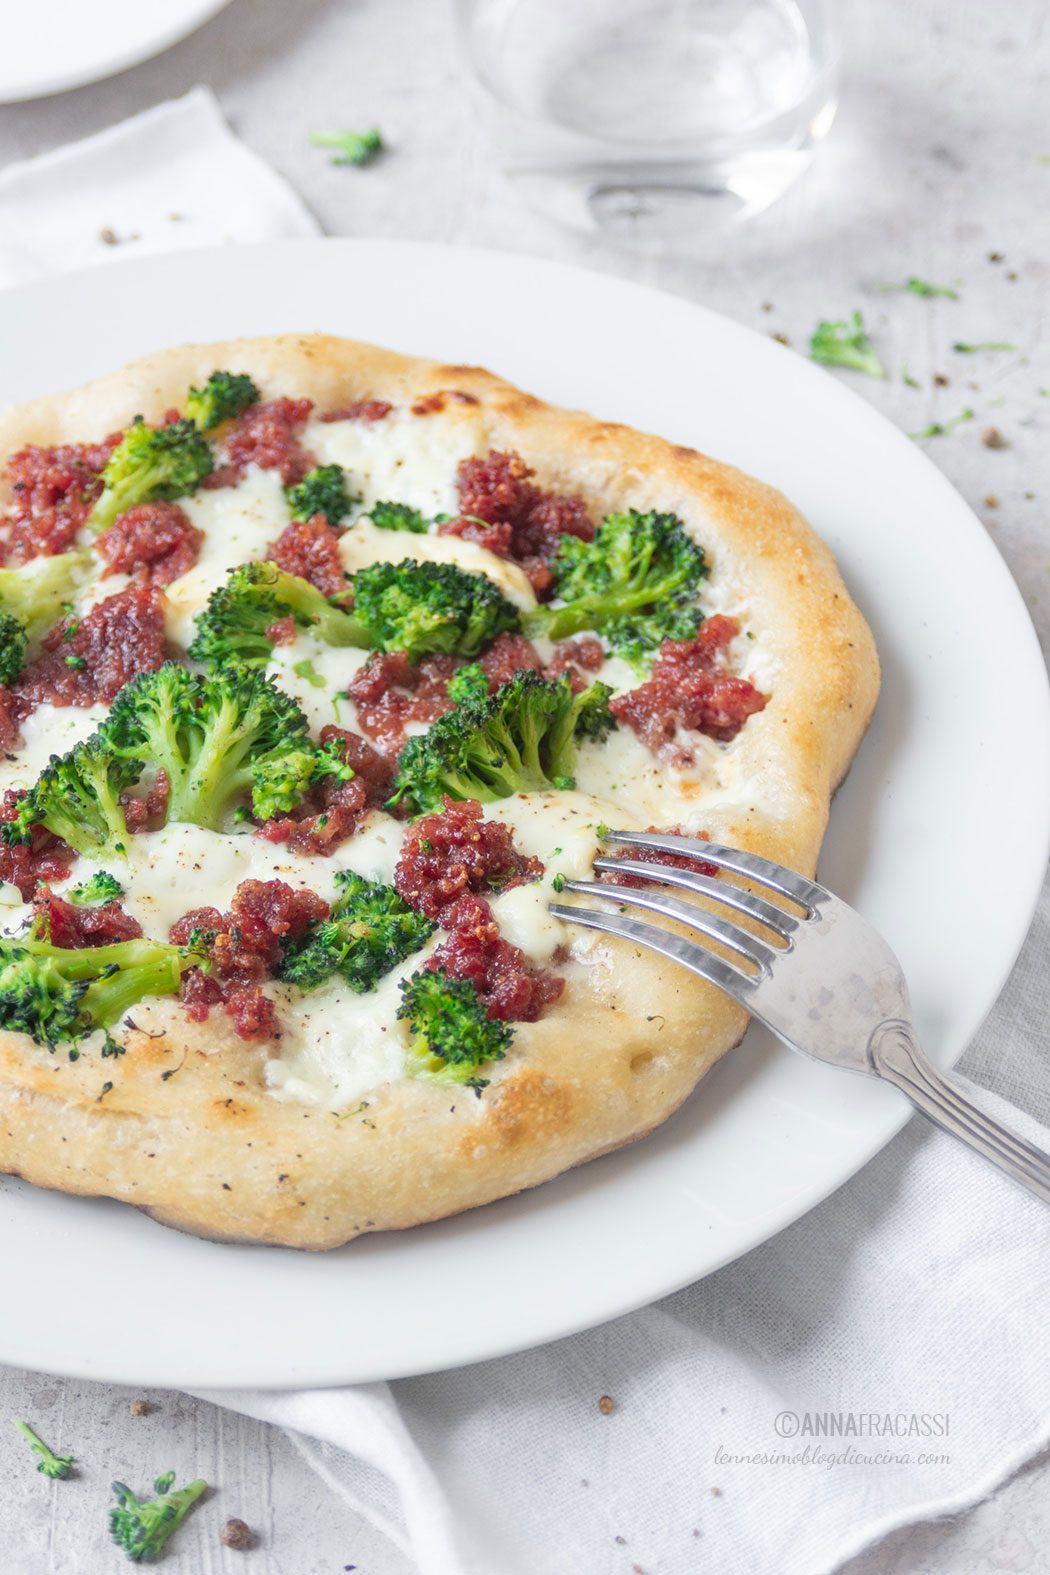 Pizza with cotechino, broccoli and stracchino